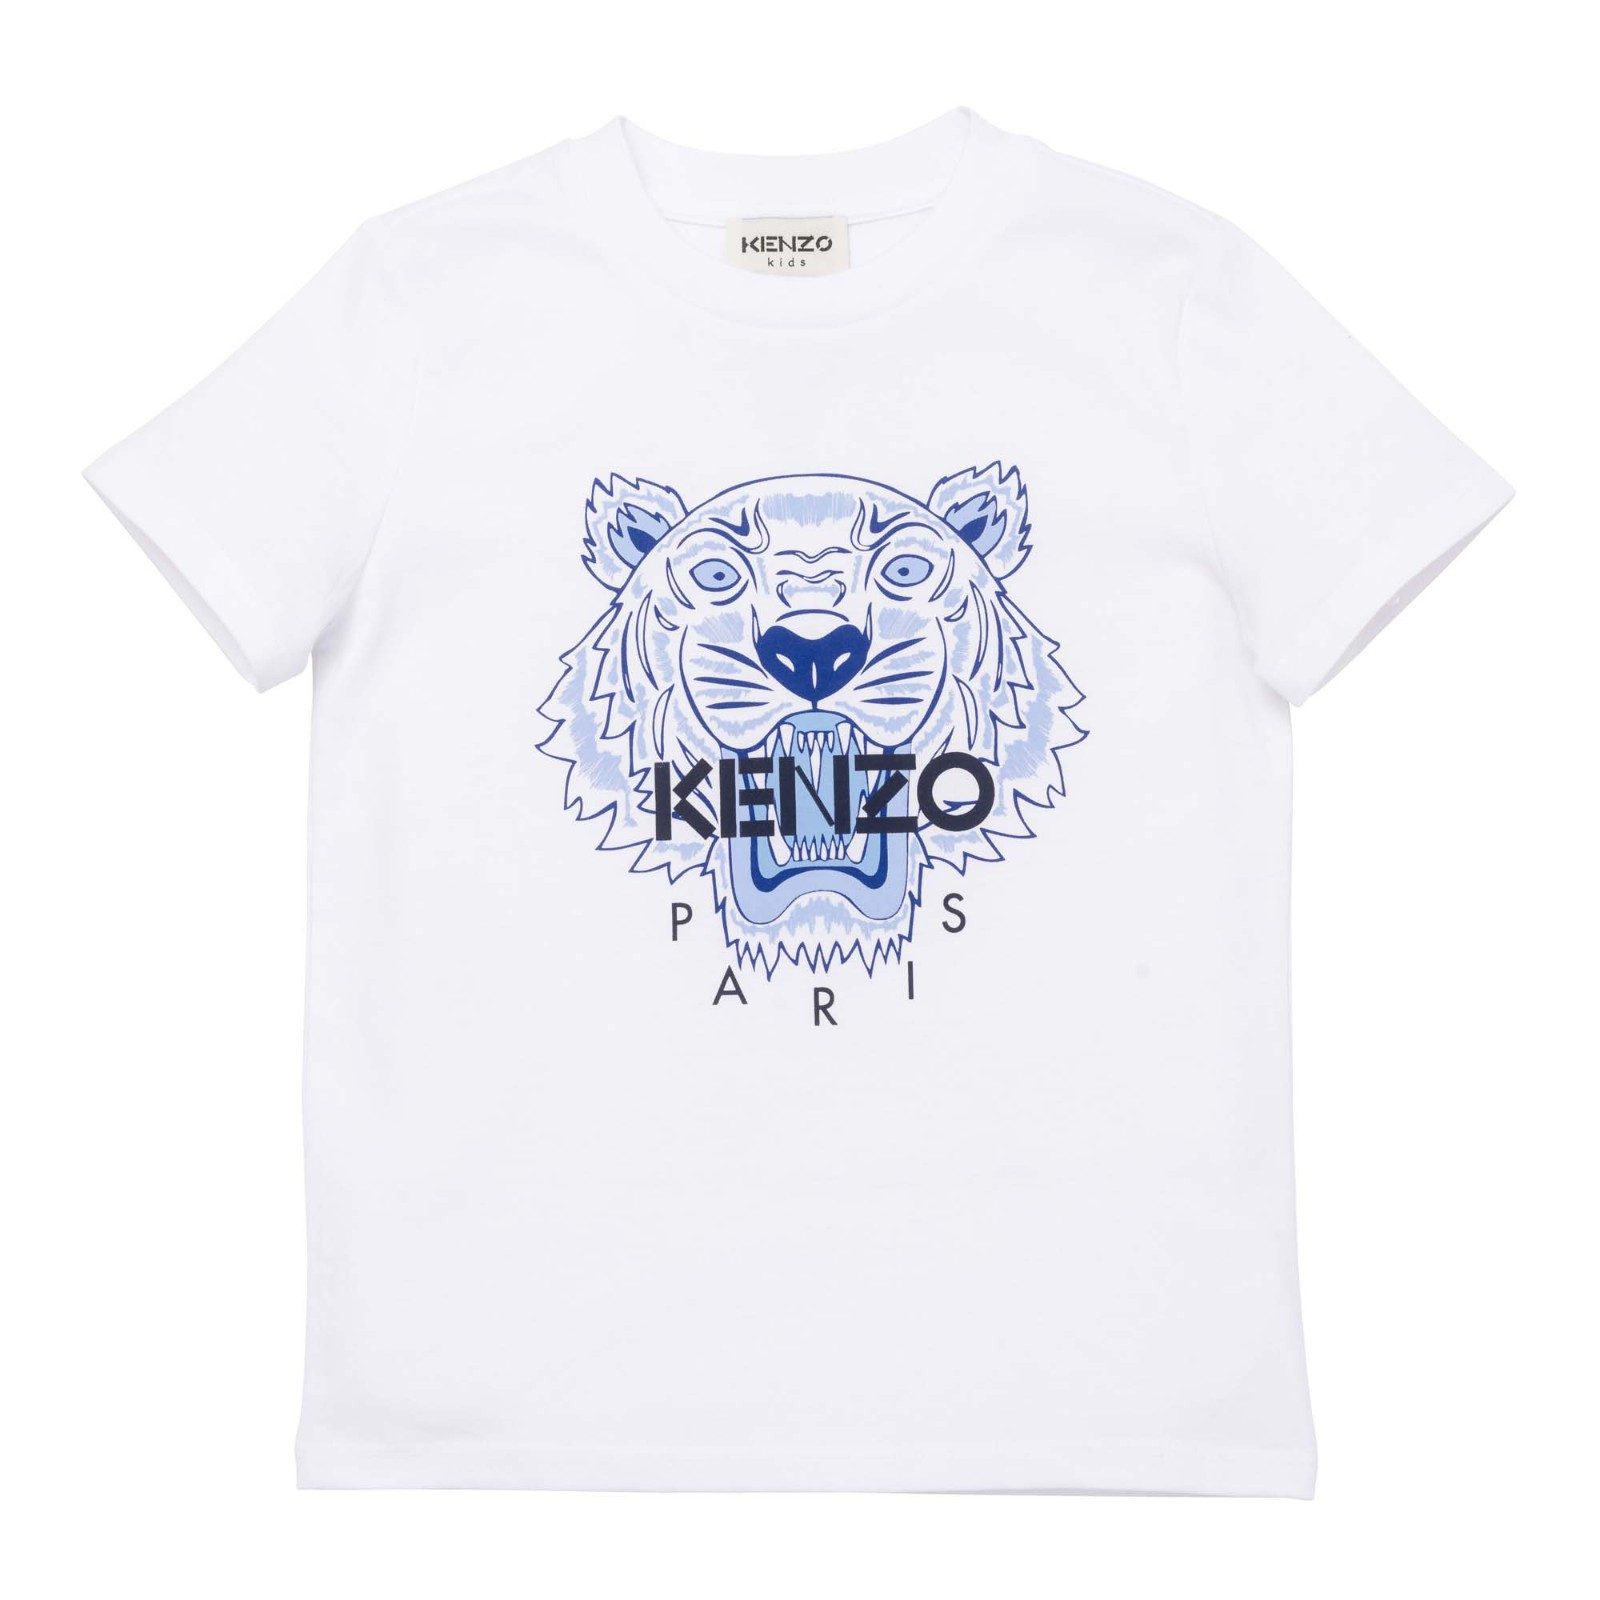 KENZO Print-Shirt Kenzo T-Shirt weiß blau Jungen Tiger